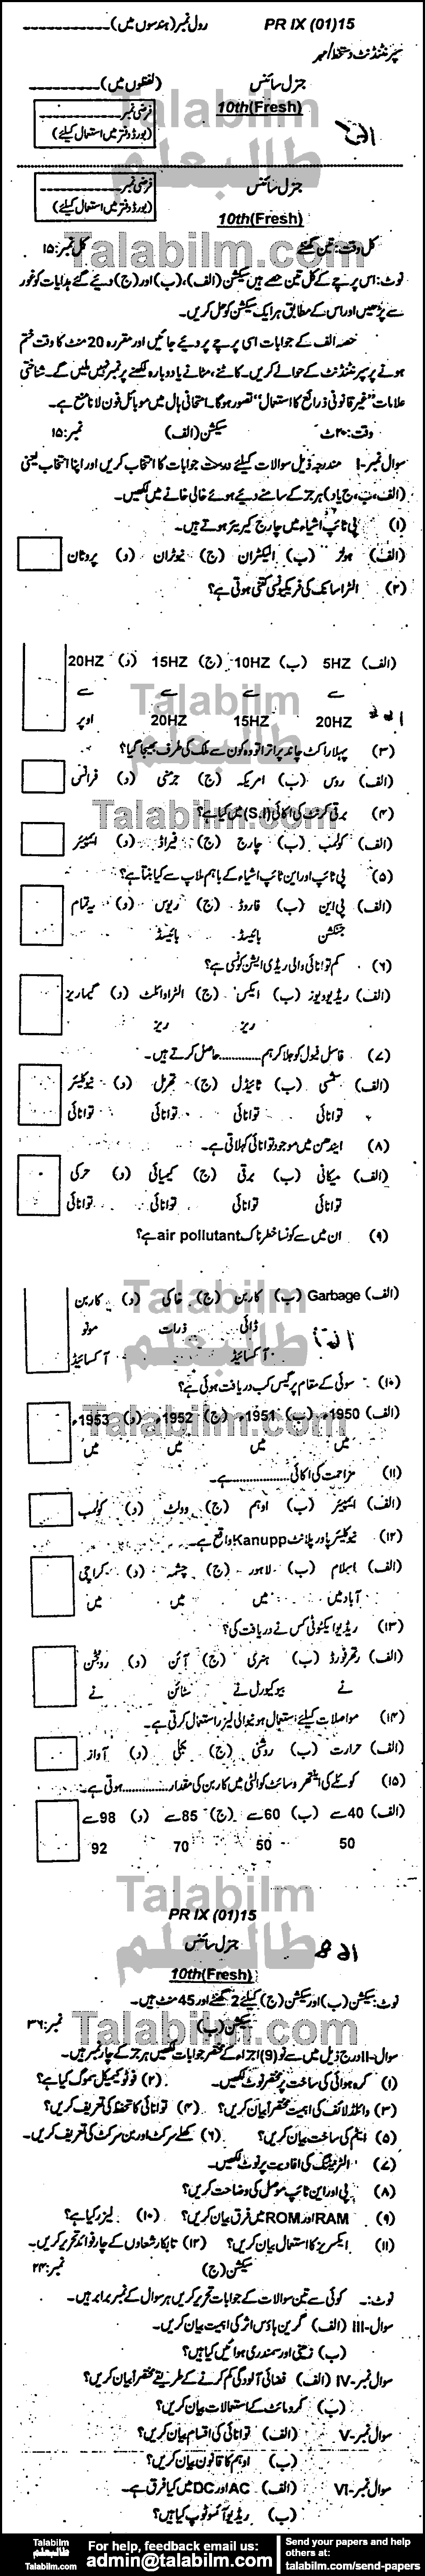 General Science 0 past paper for Urdu Medium 2015 Group-I